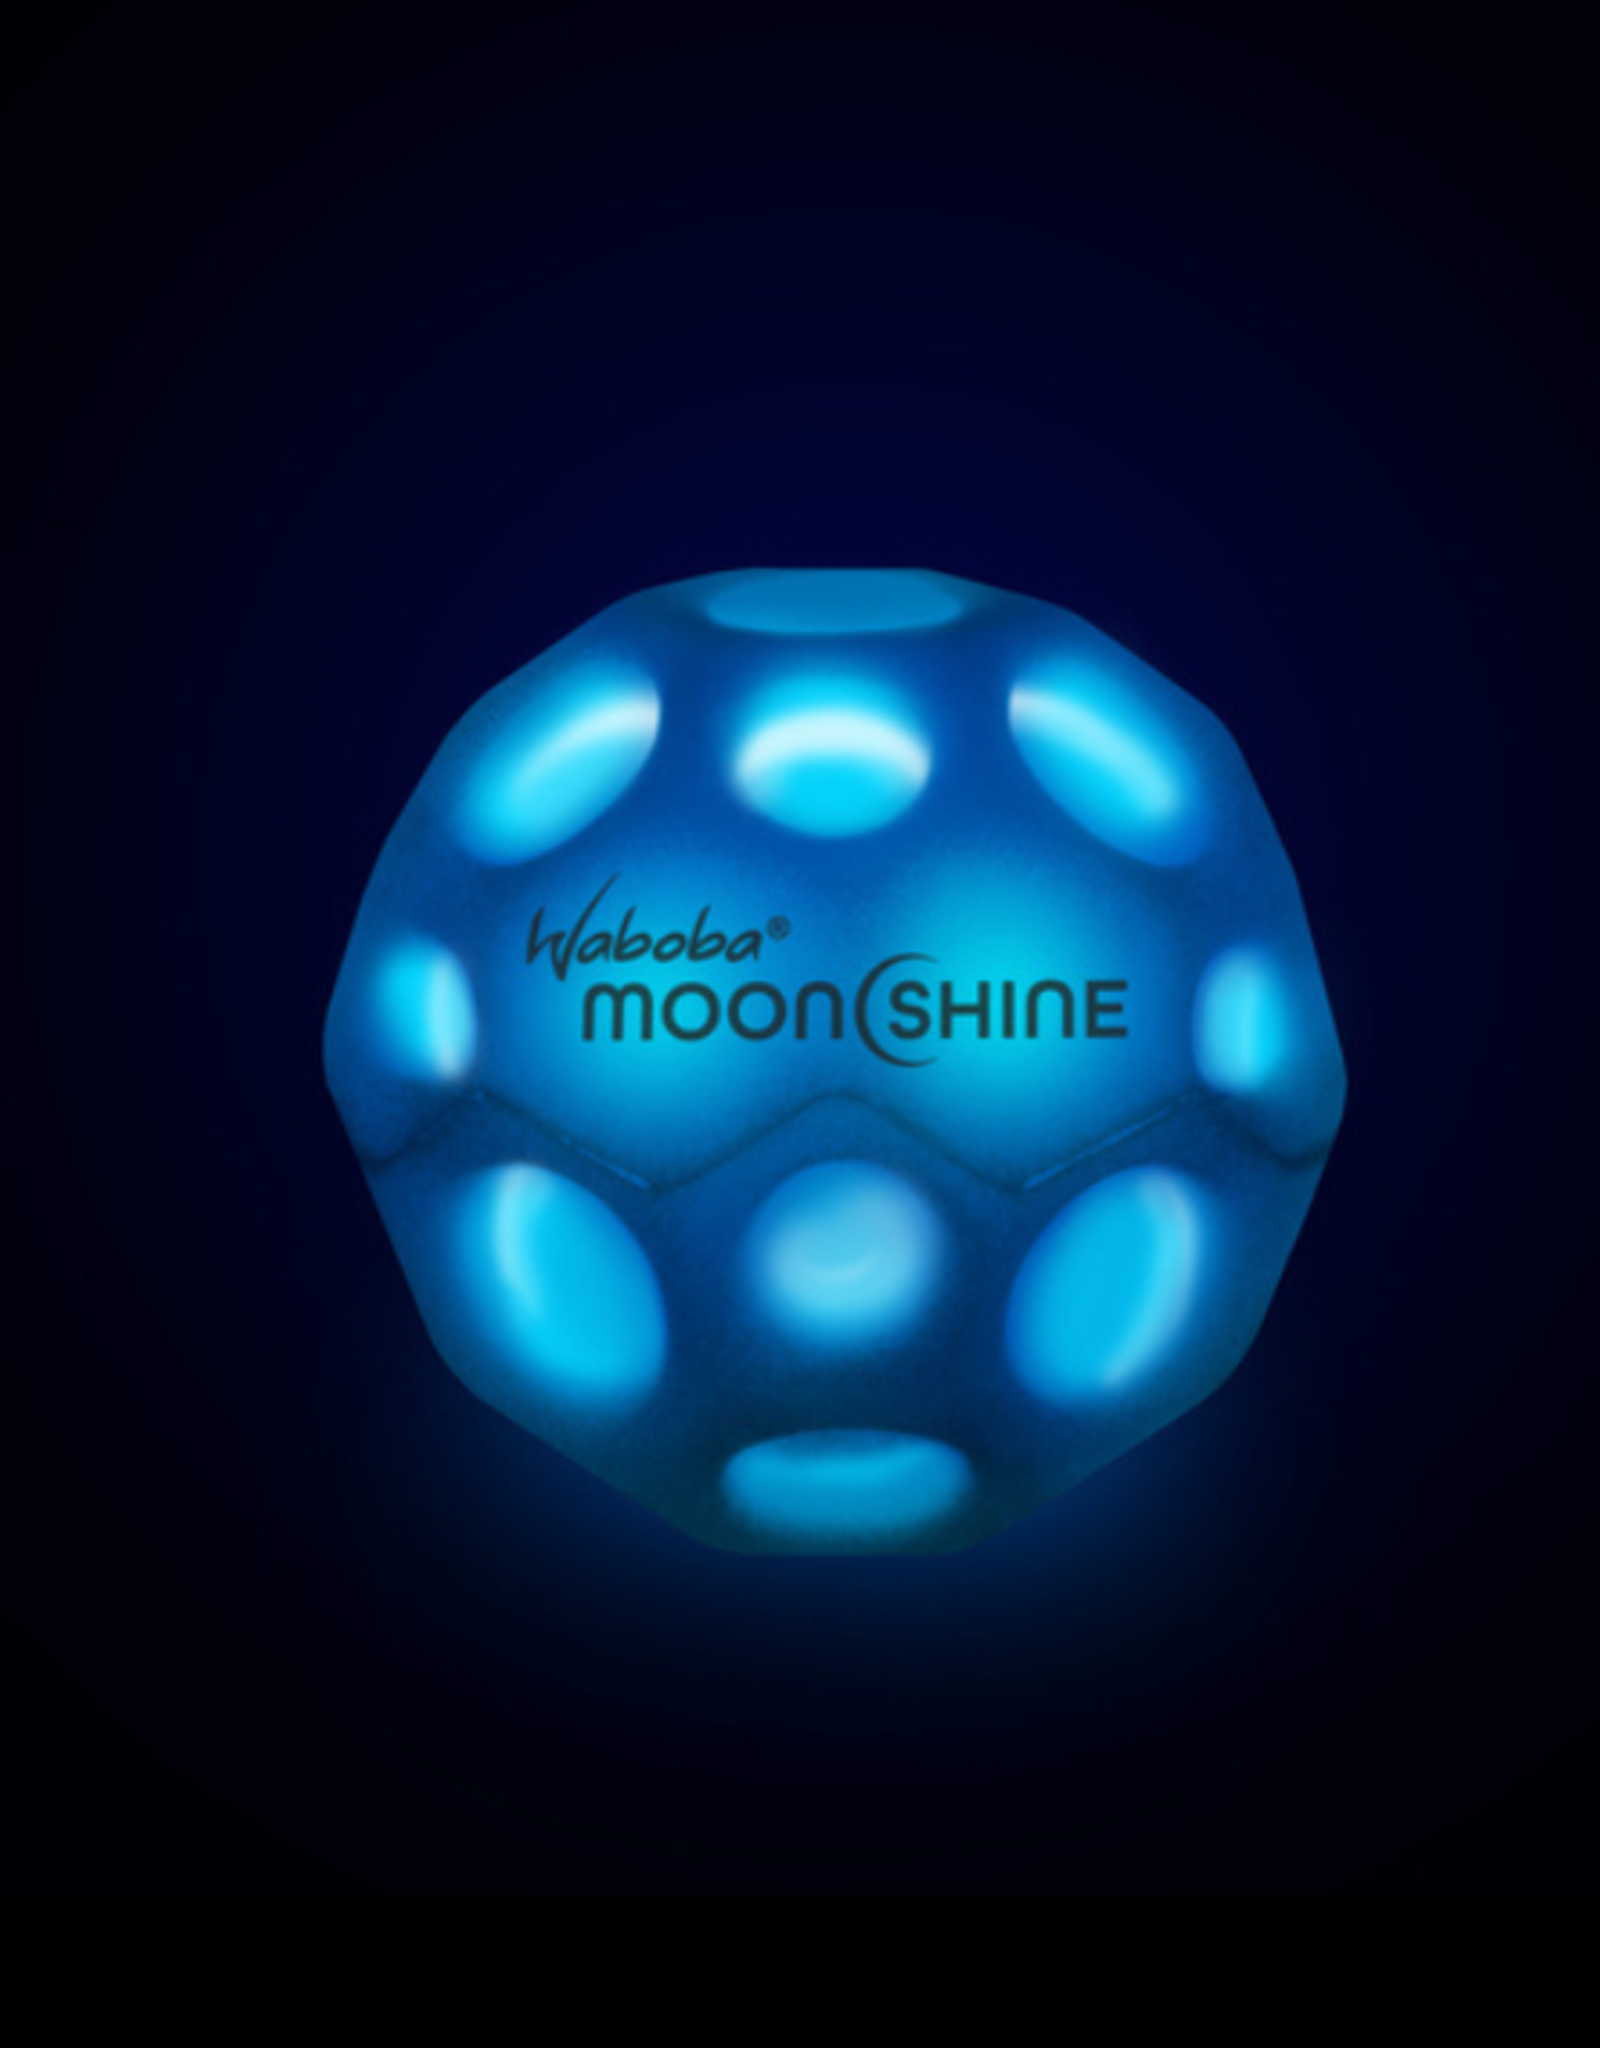 Waboba - Moonshine Moon Ball